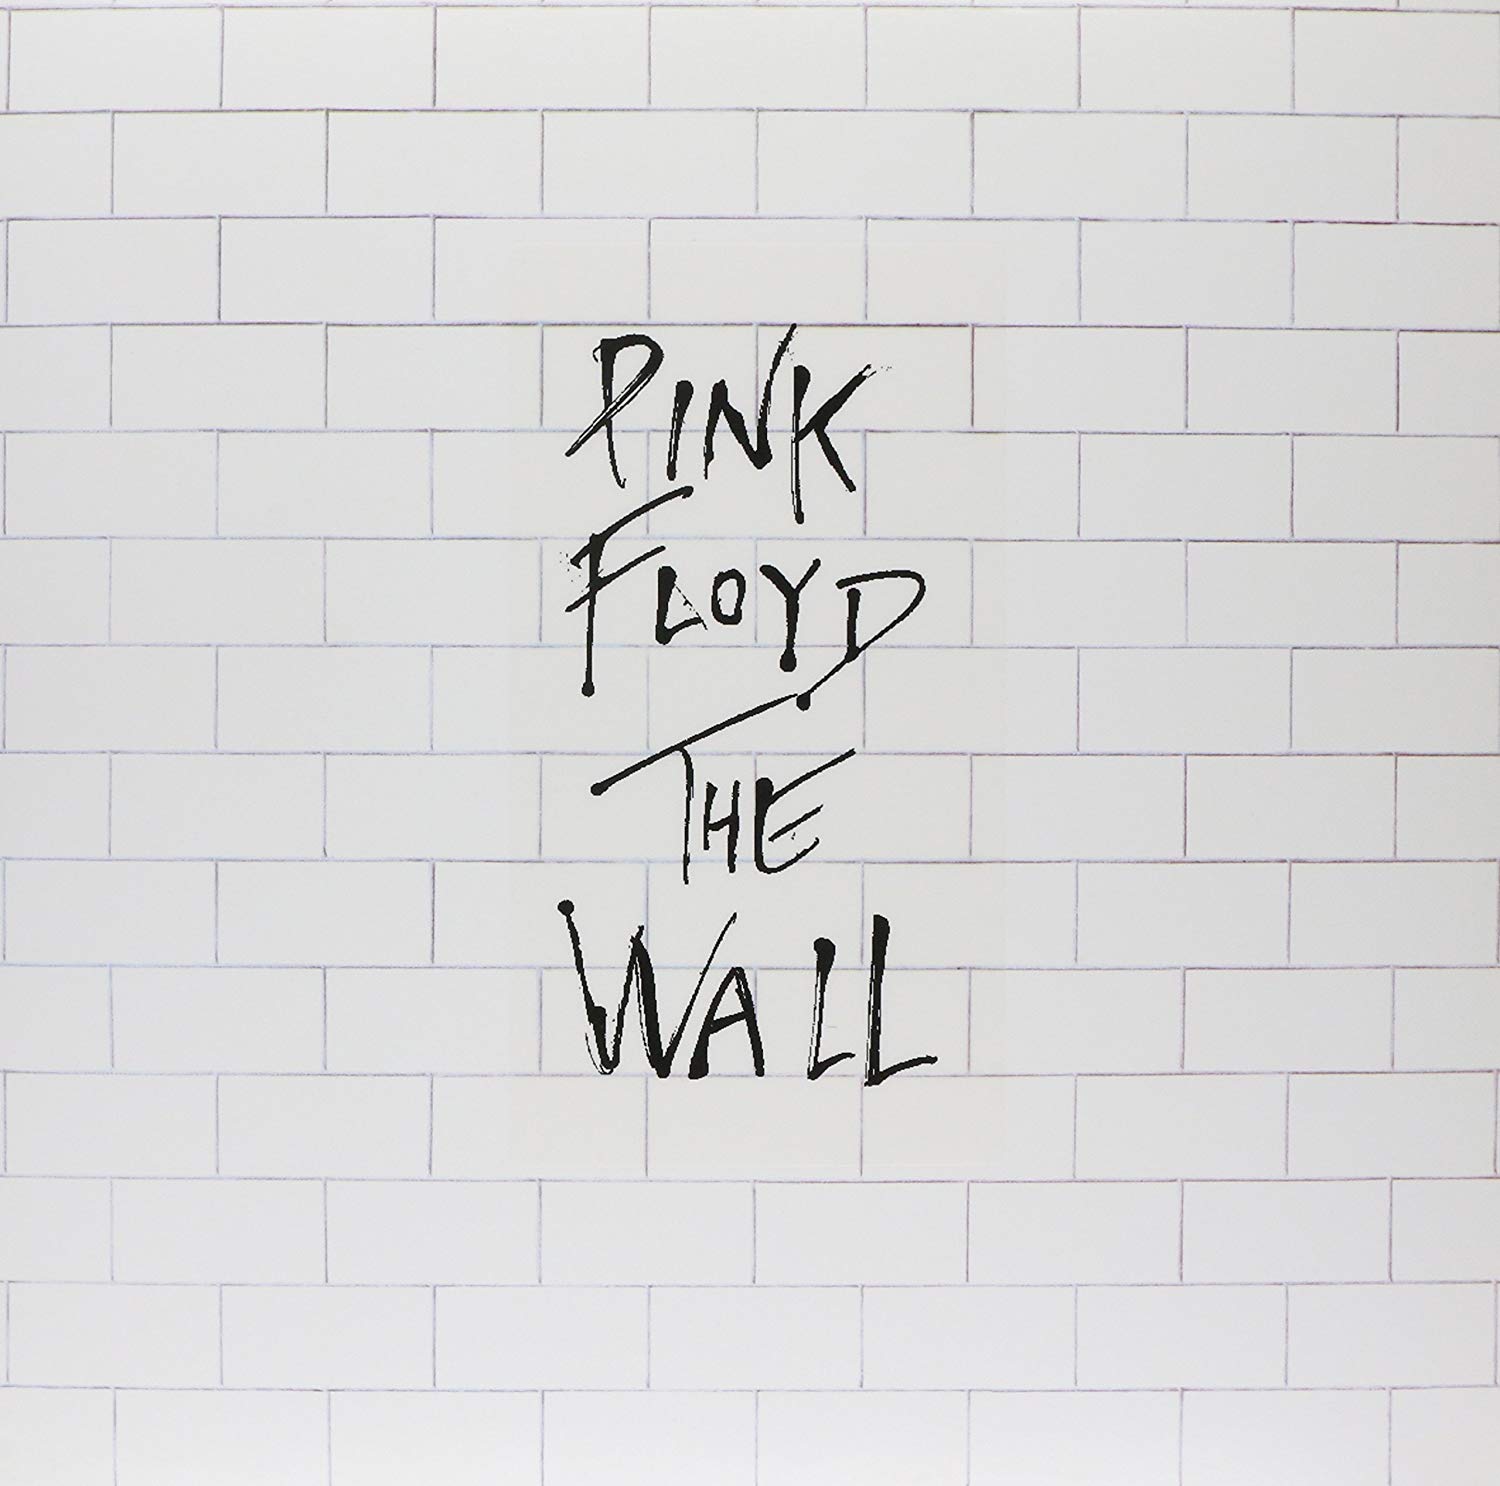 PINK FLOYD/THE WALL 180 GRAM (VINYL)